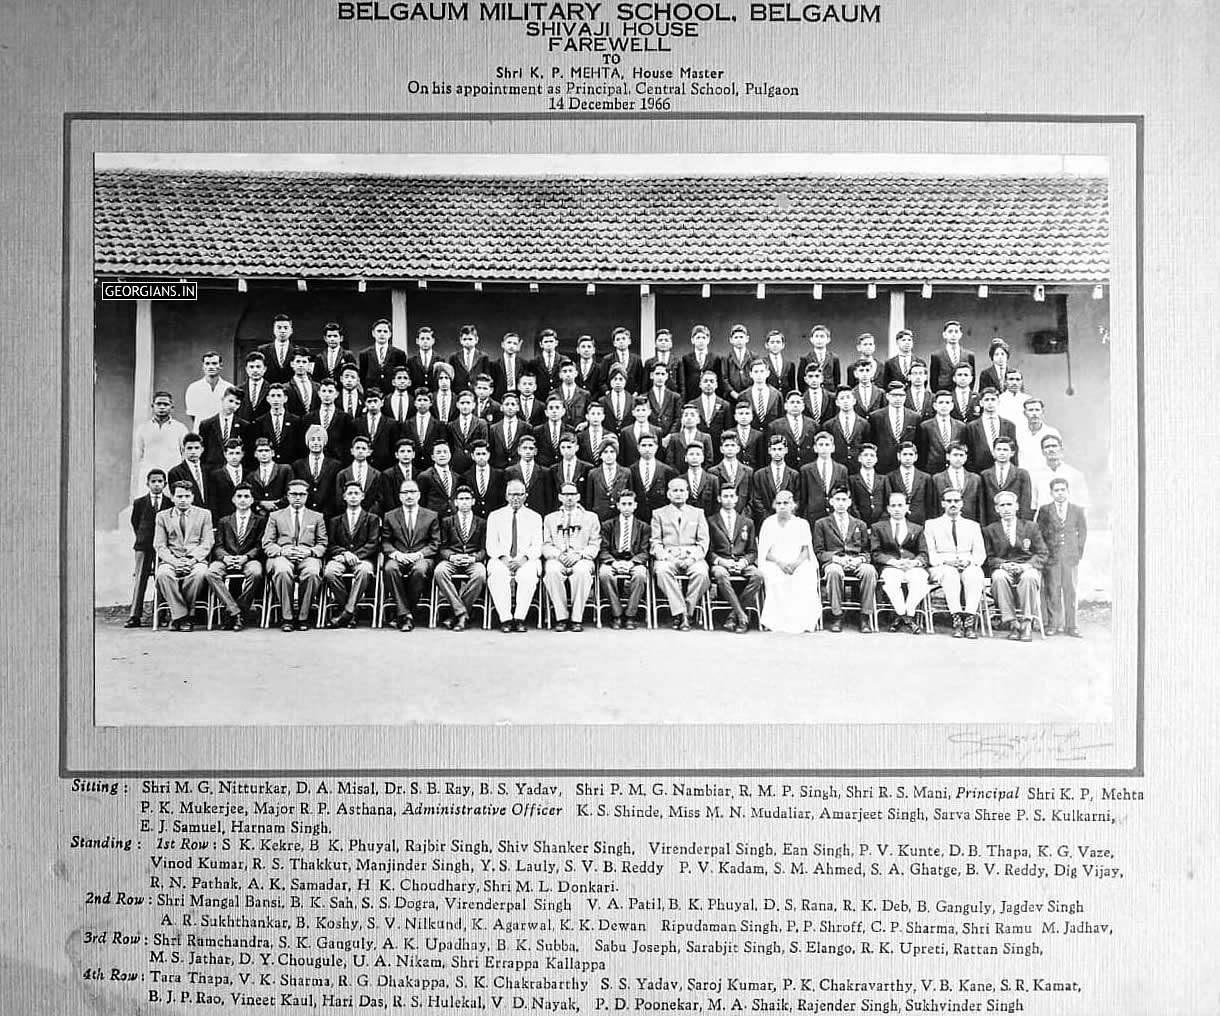 Farewell to KP Mehta House Master Shivaji House, Belgaum Military School - 14 December, 1966